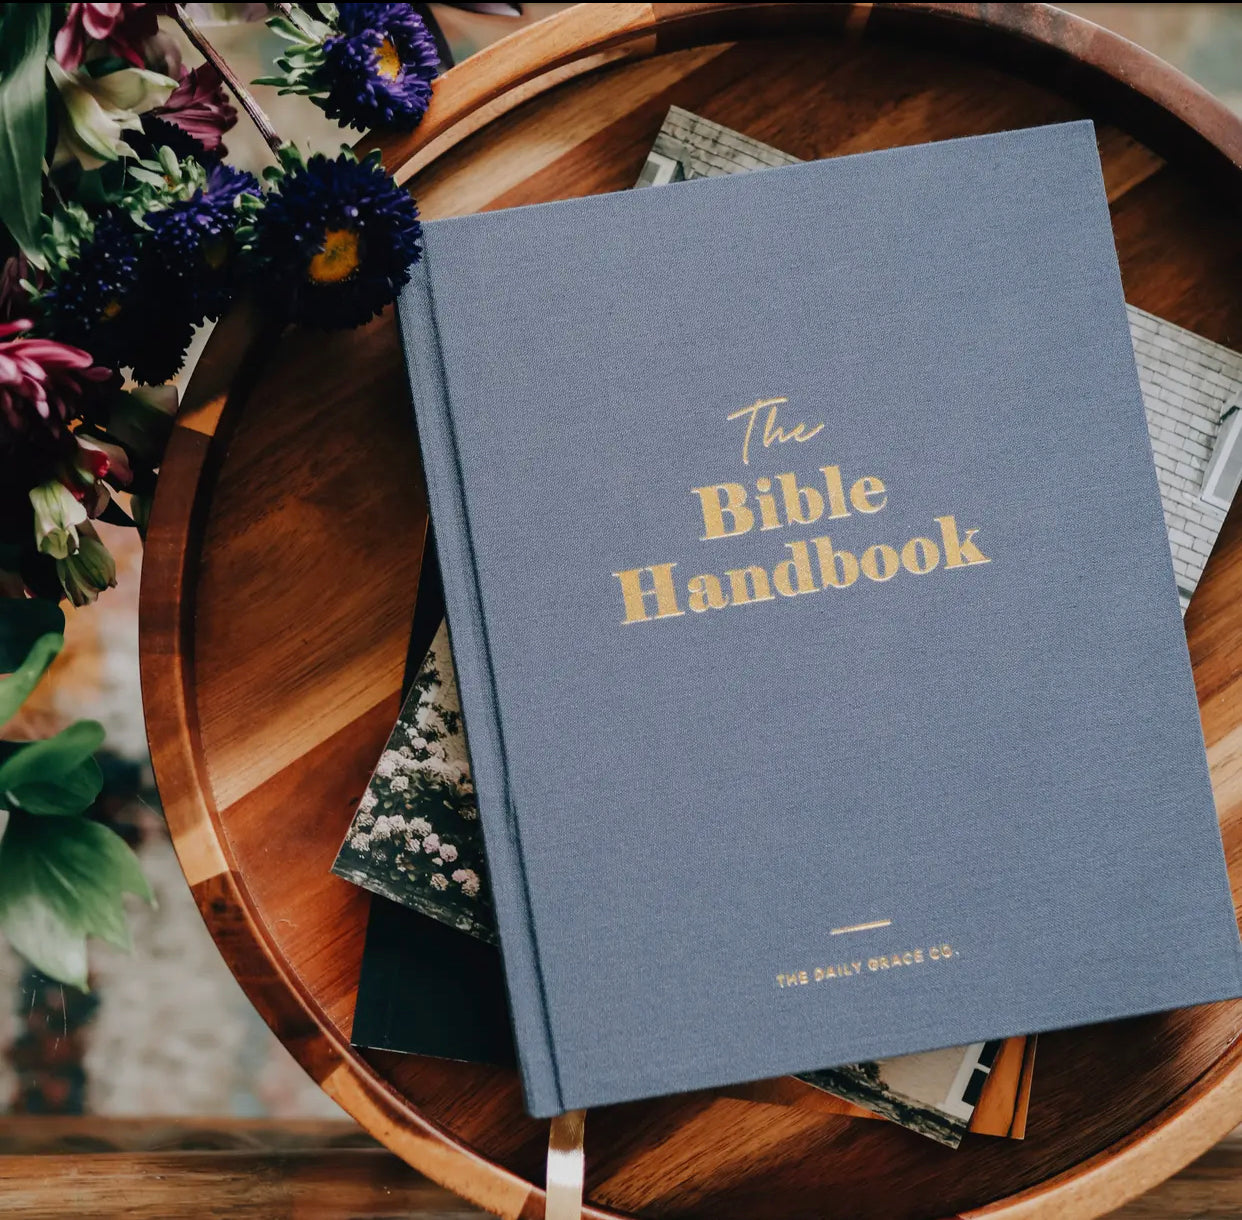 The Bible handbook